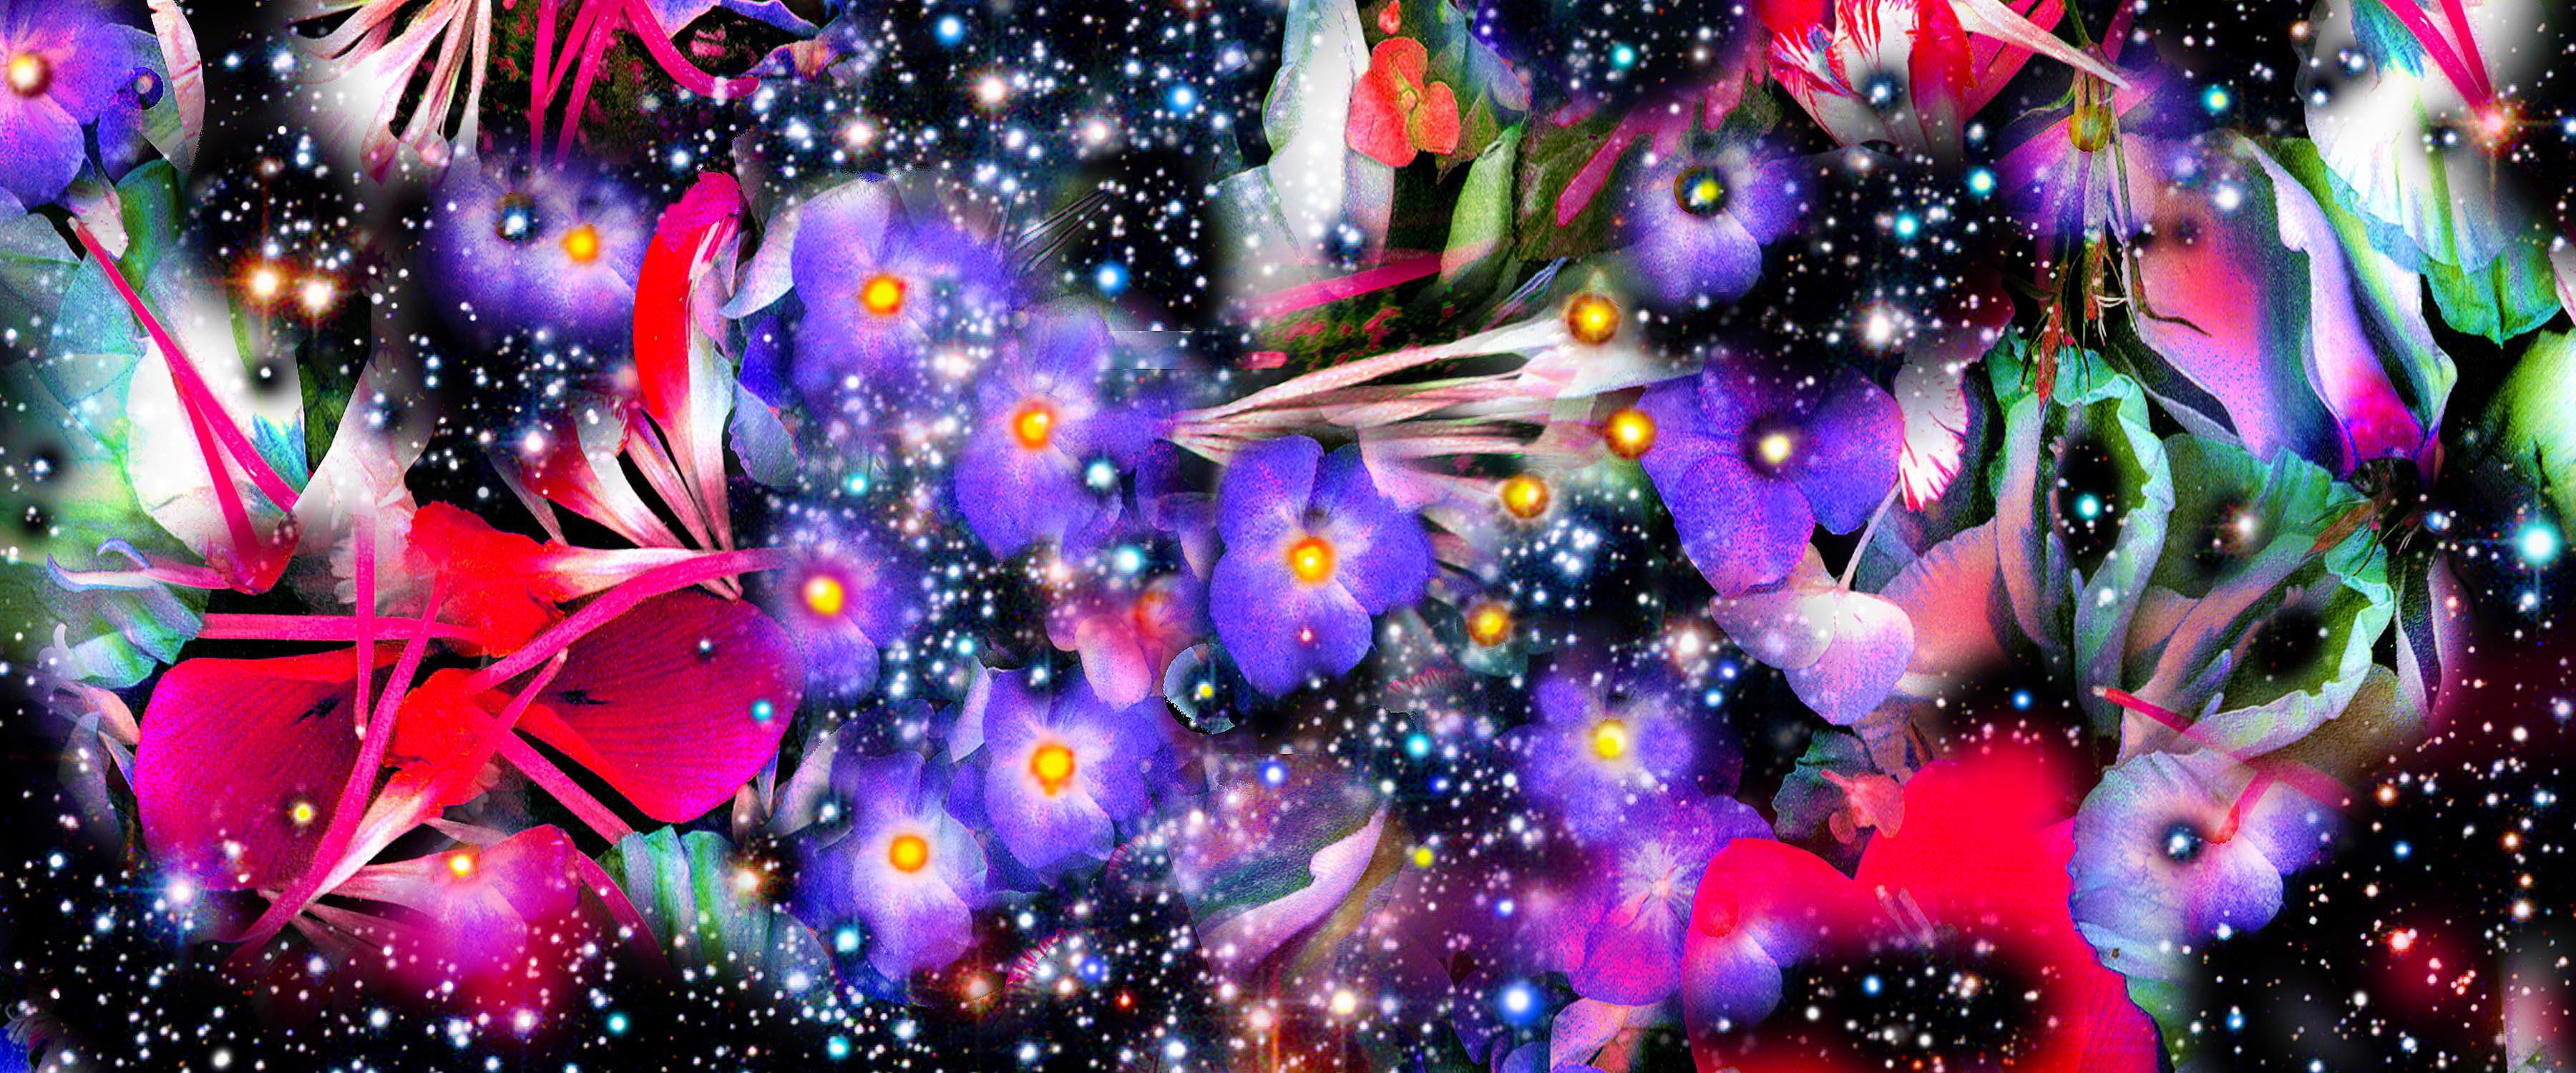 Gardens &amp; Galaxies Lila Blumen 24 Zoll x 42 Zoll farbenfrohe abstrakte Nachthimmelmuster 